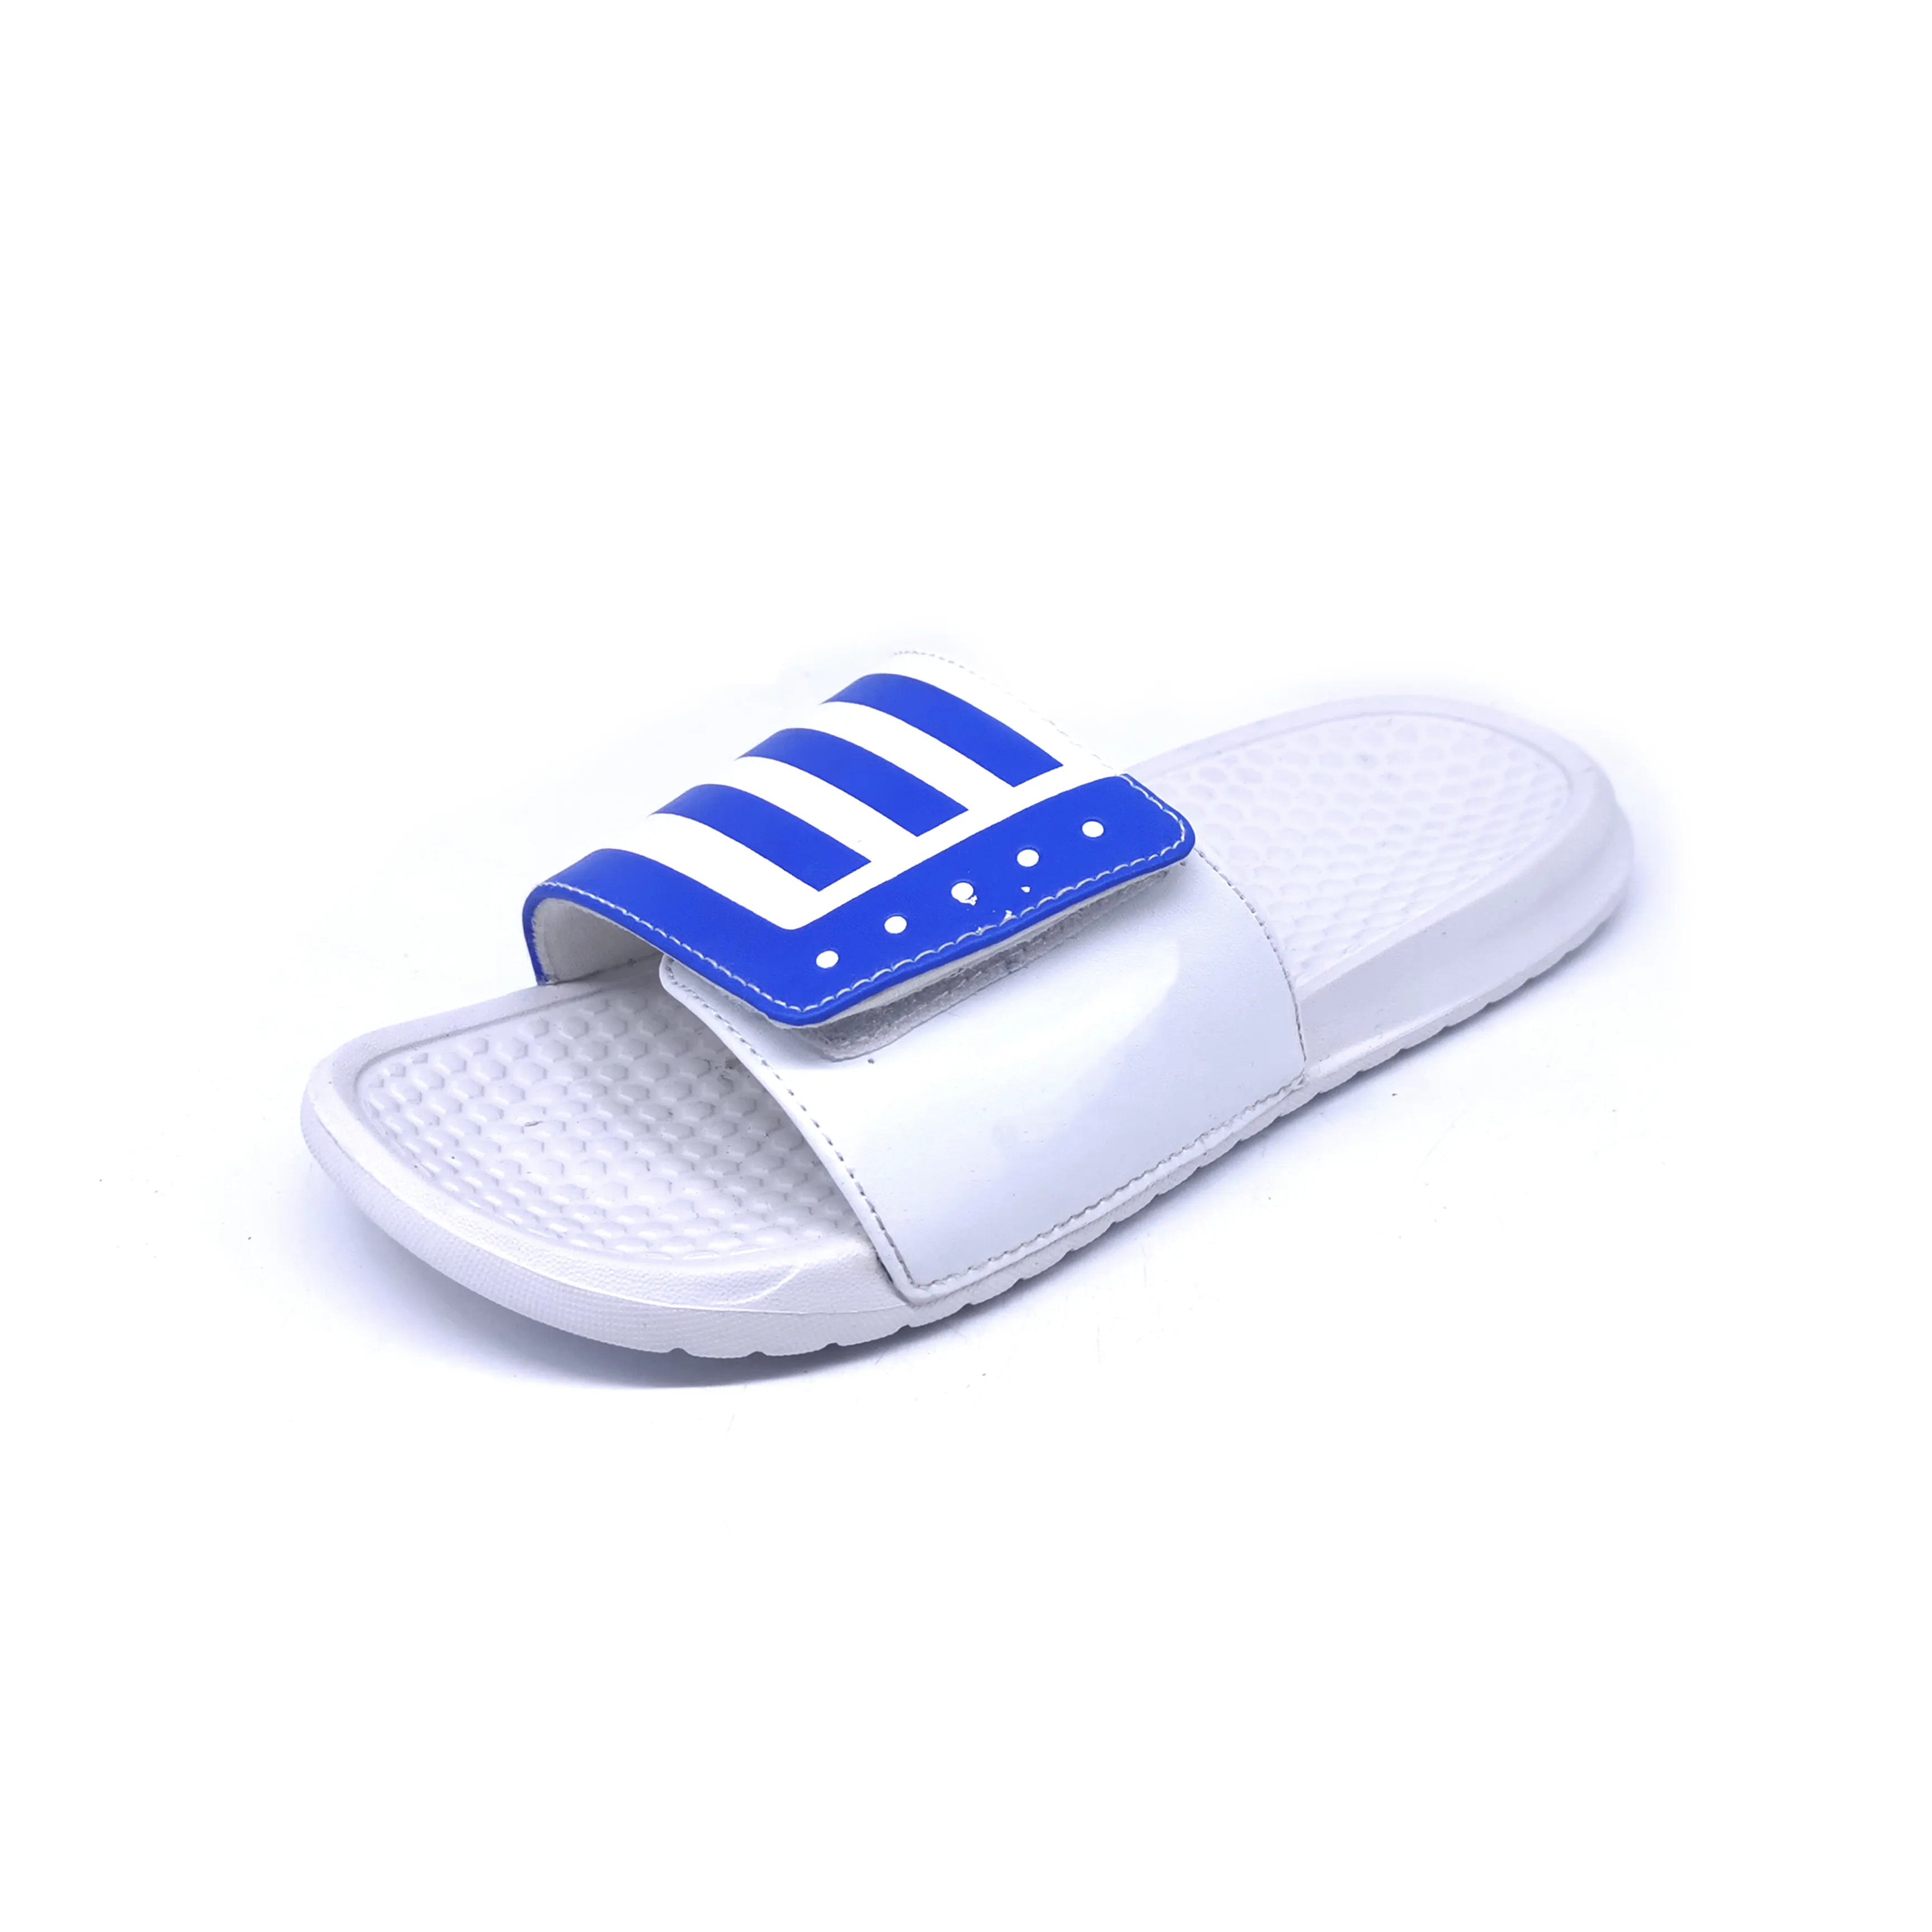 Fornitore cinese di stile di modo pantofole per le donne delle signore pantofole sandalo 2020 casa coperta pantofole flip flop